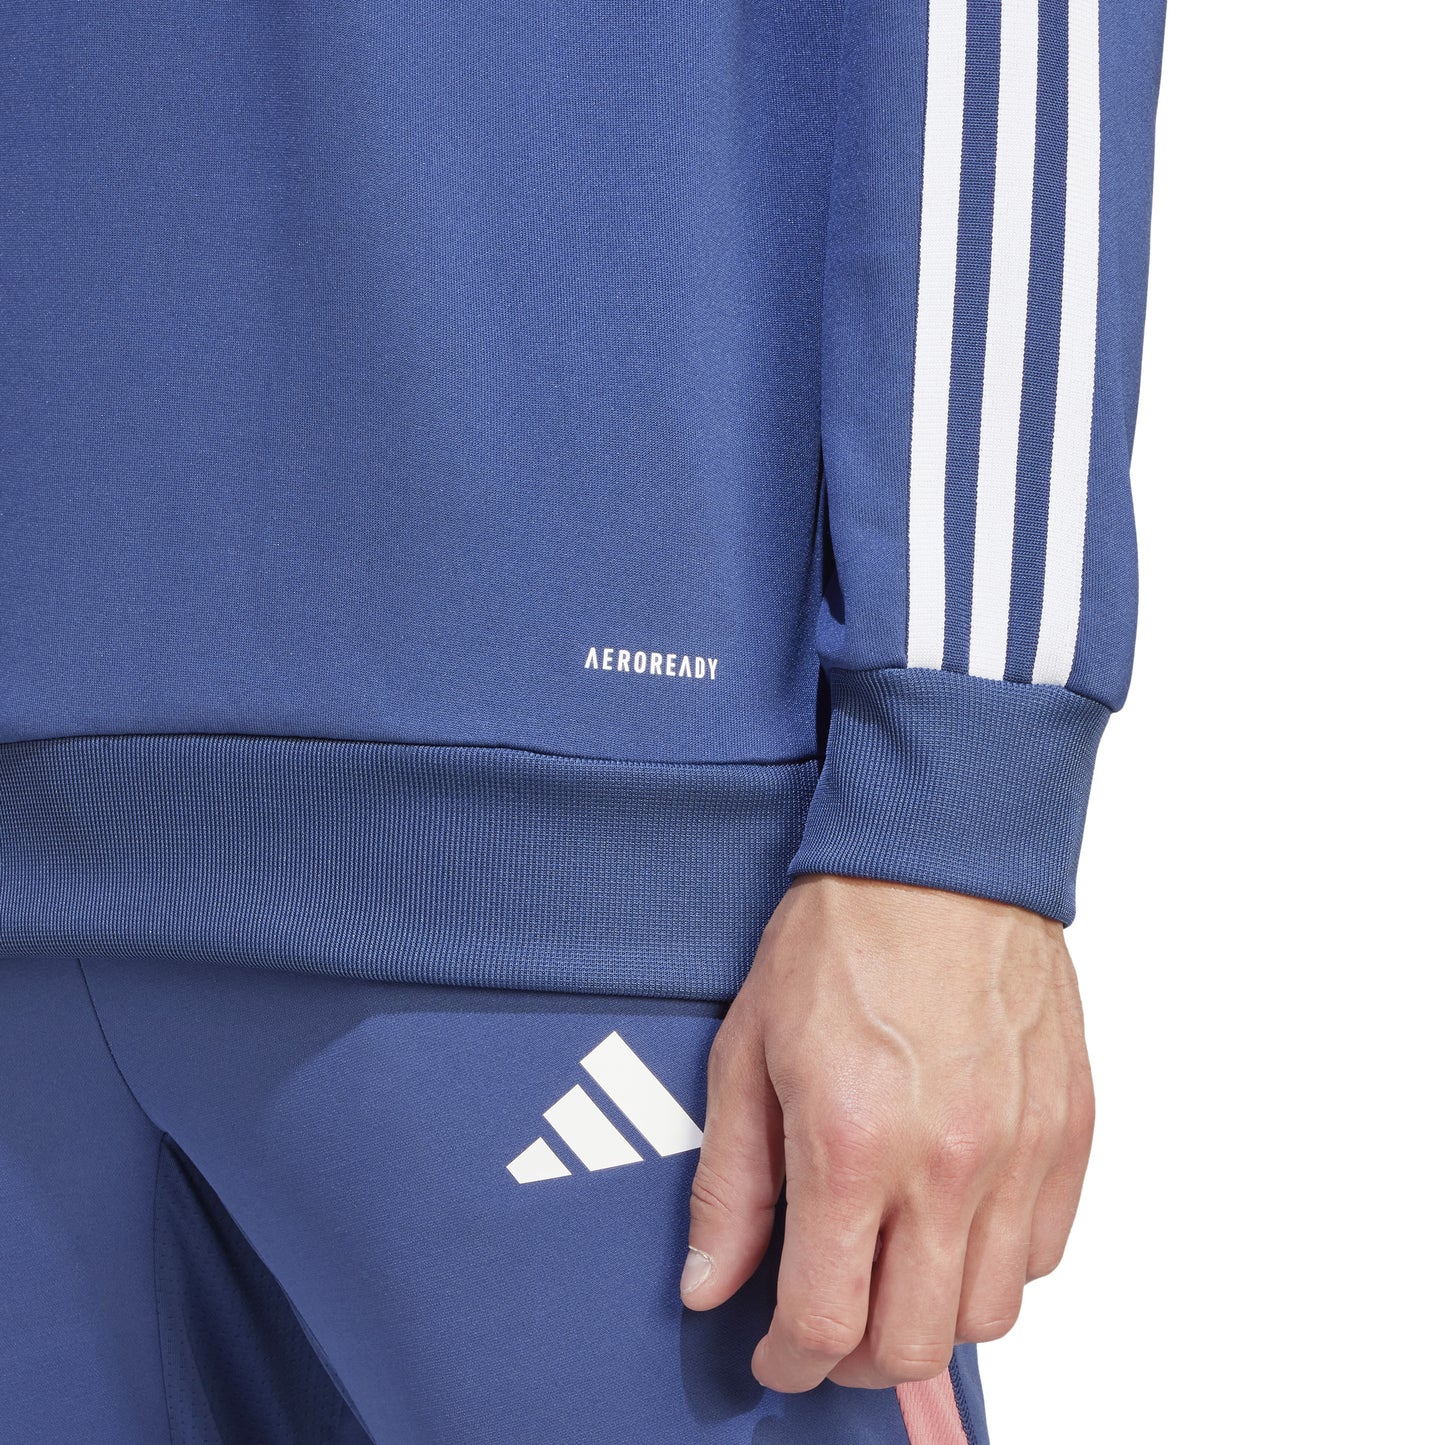 Olympique Lyonnais 2023/24 Straight Fit Adidas Hoodie